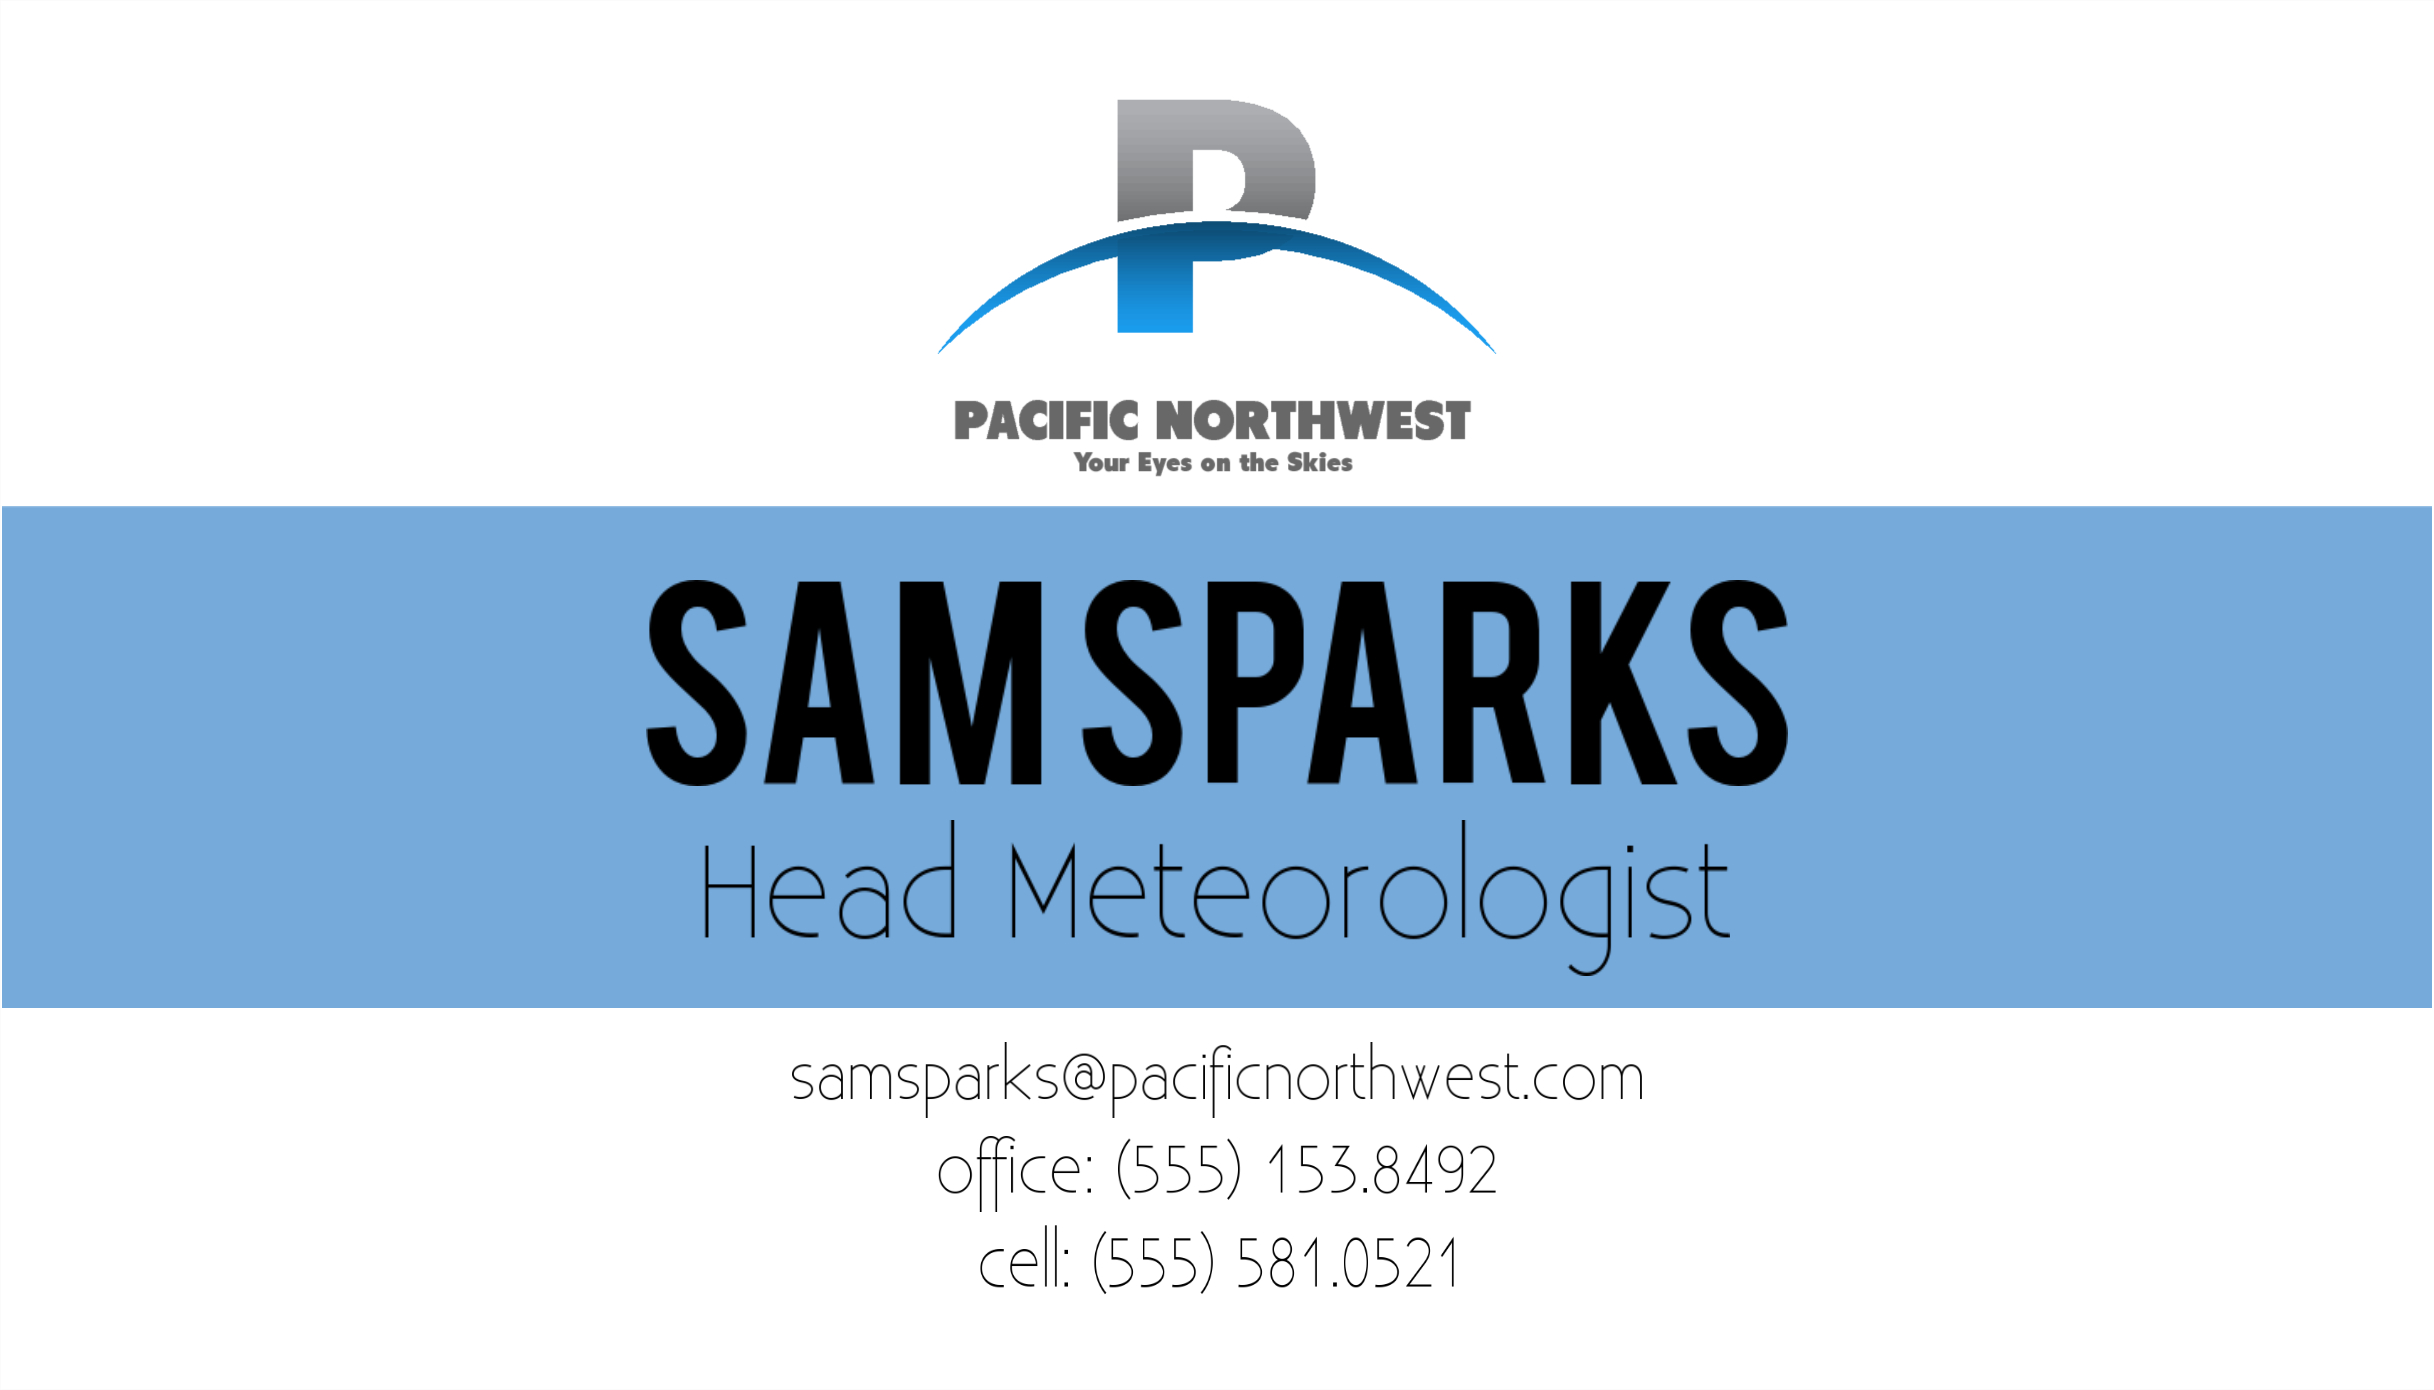 Sam Sparks Business Cards